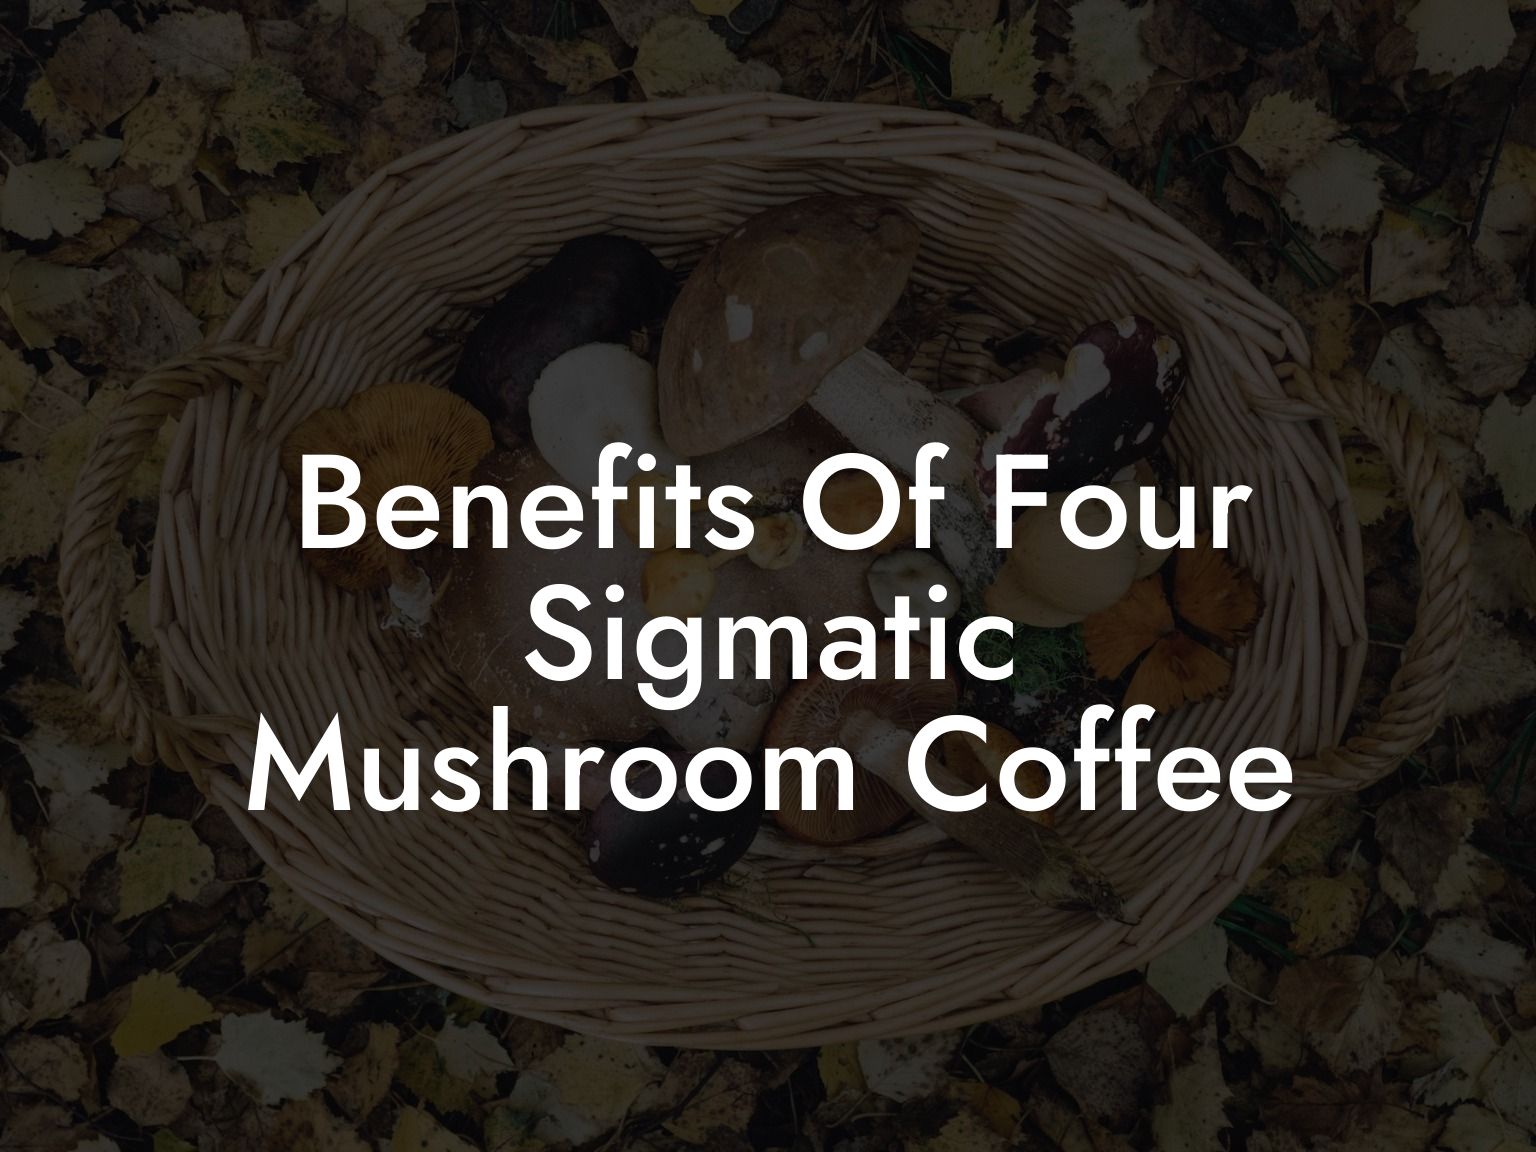 Benefits Of Four Sigmatic Mushroom Coffee